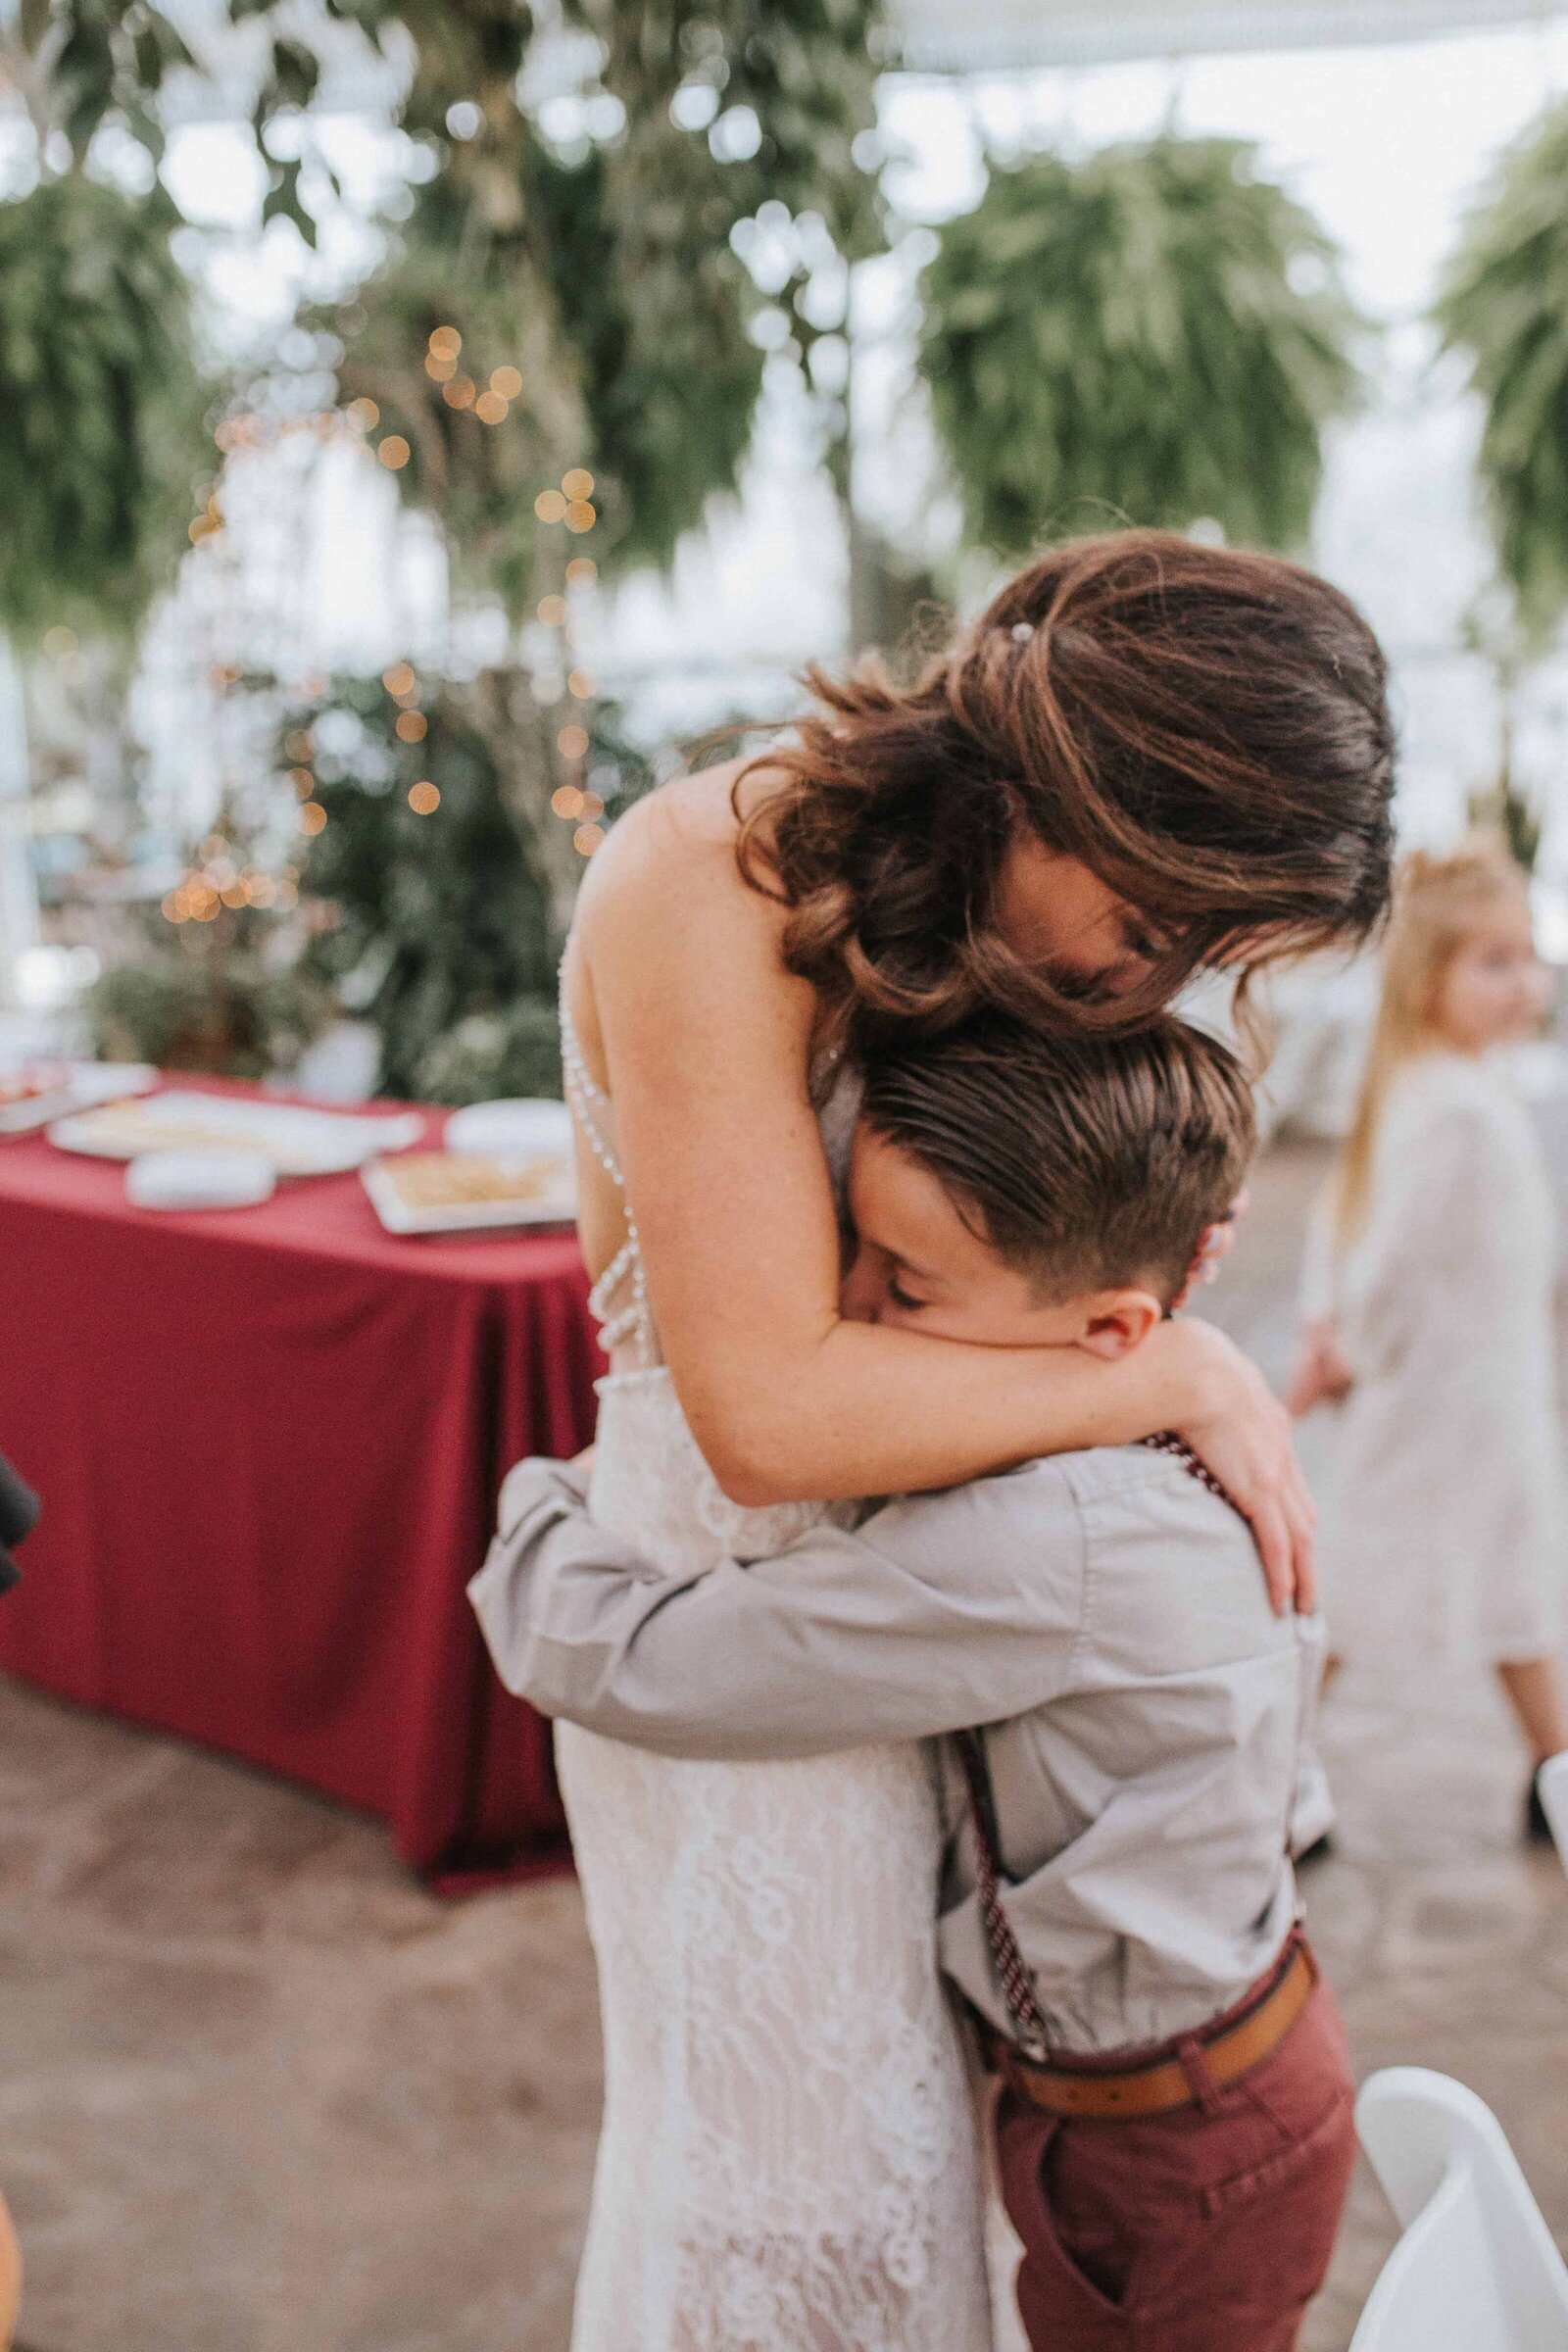 Sacramento Wedding Photographer captures bride hugging son while wearing wedding attire